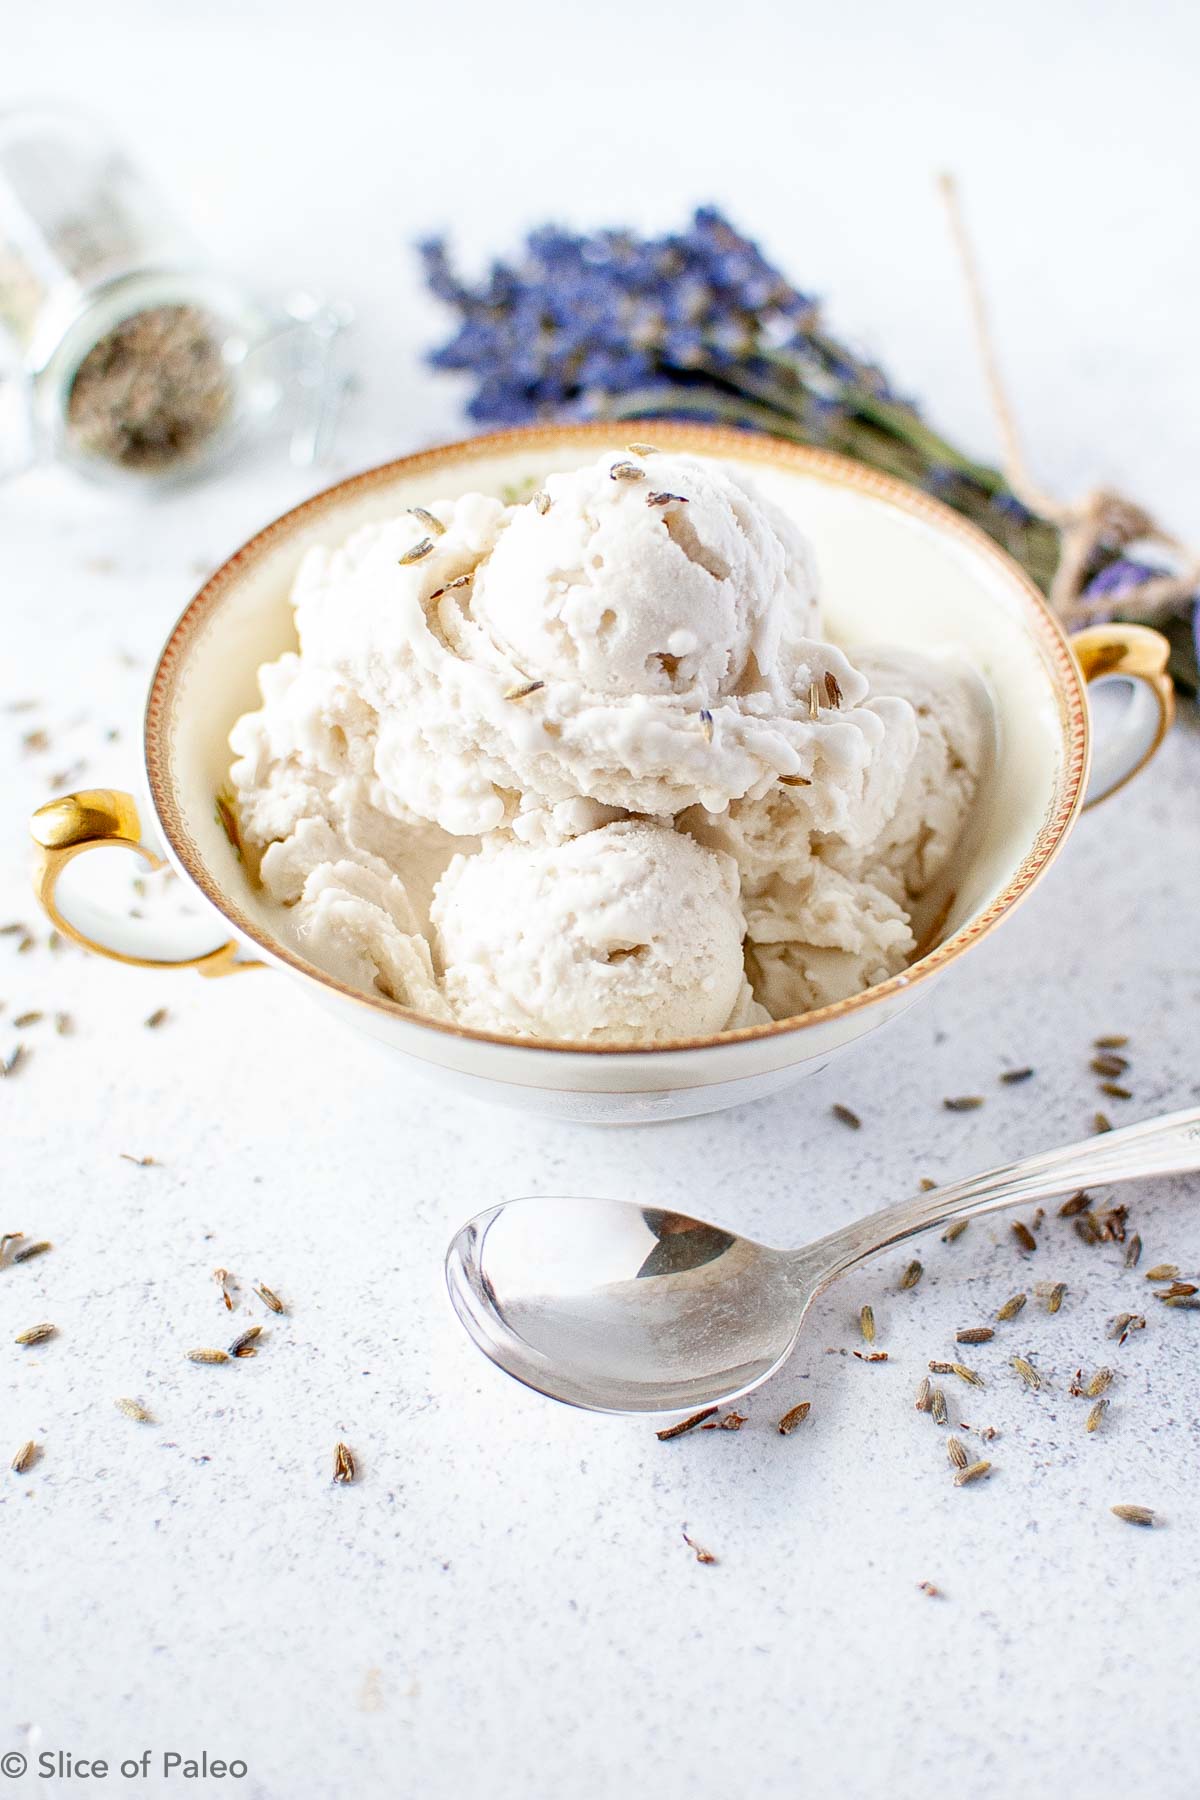 Paleo Lavender Honey Ice Cream ready to eat